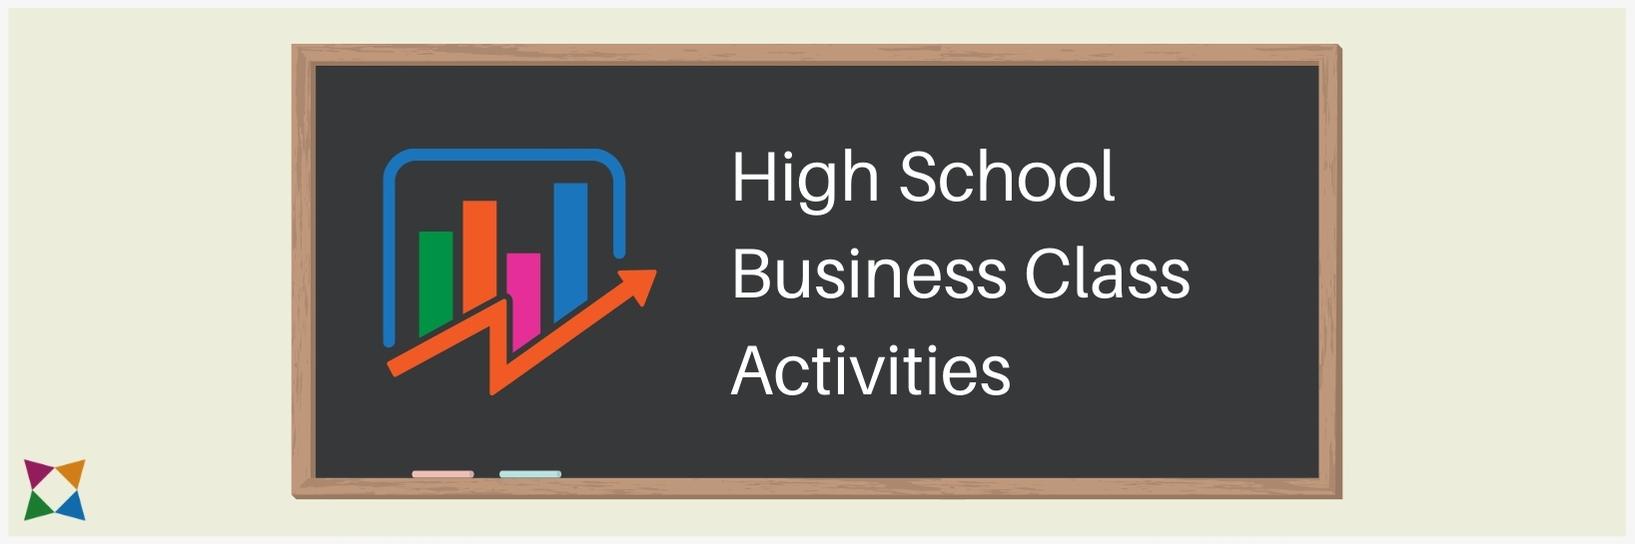 High School Business Class Activities: 5 Top Options